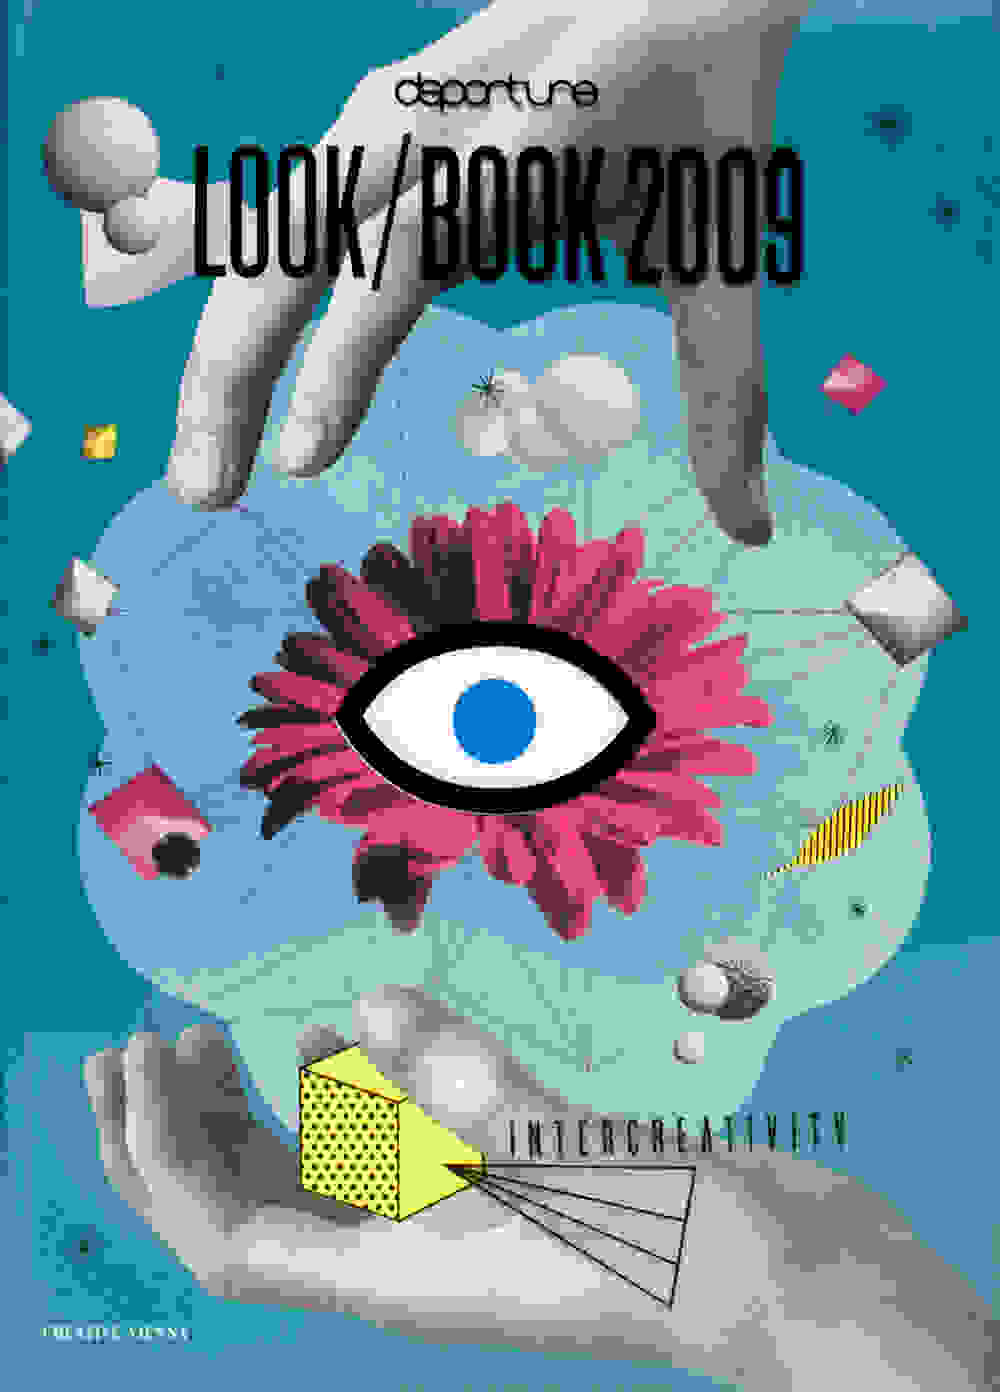 Departure Lookbook2009 Cover 0